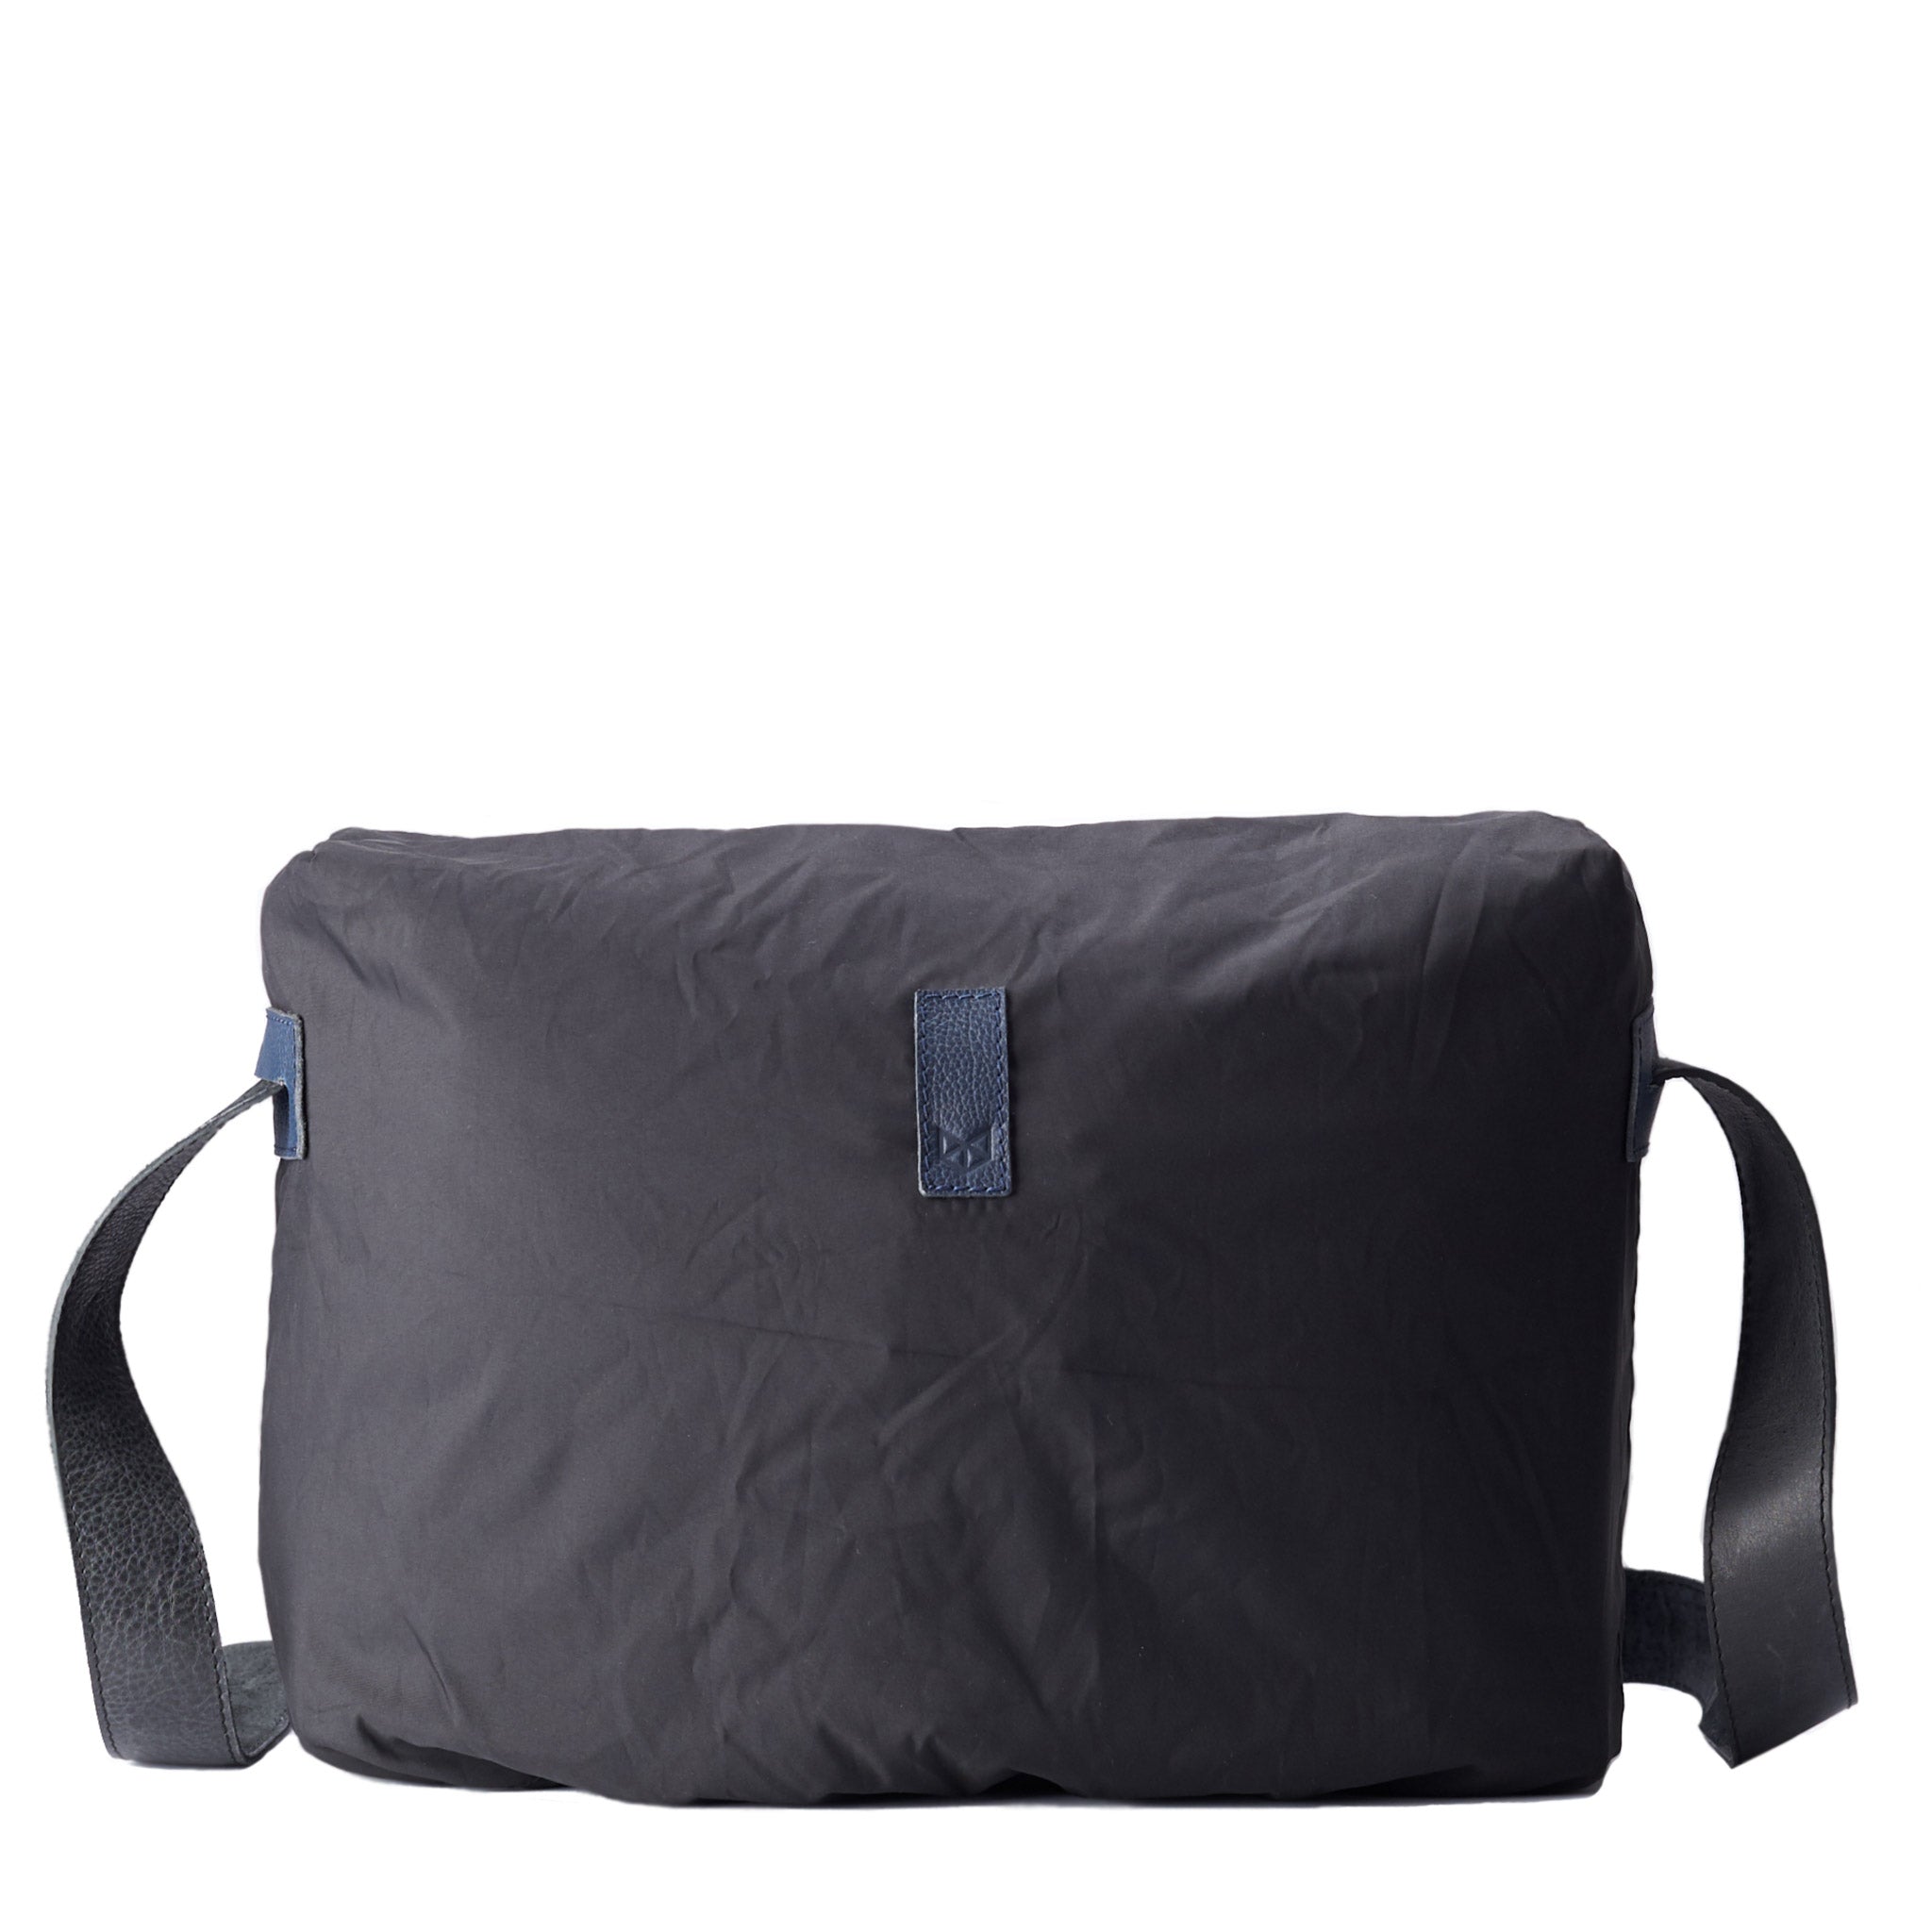 Messenger Bag Waterproof Rain Cover · Black by Capra Leather